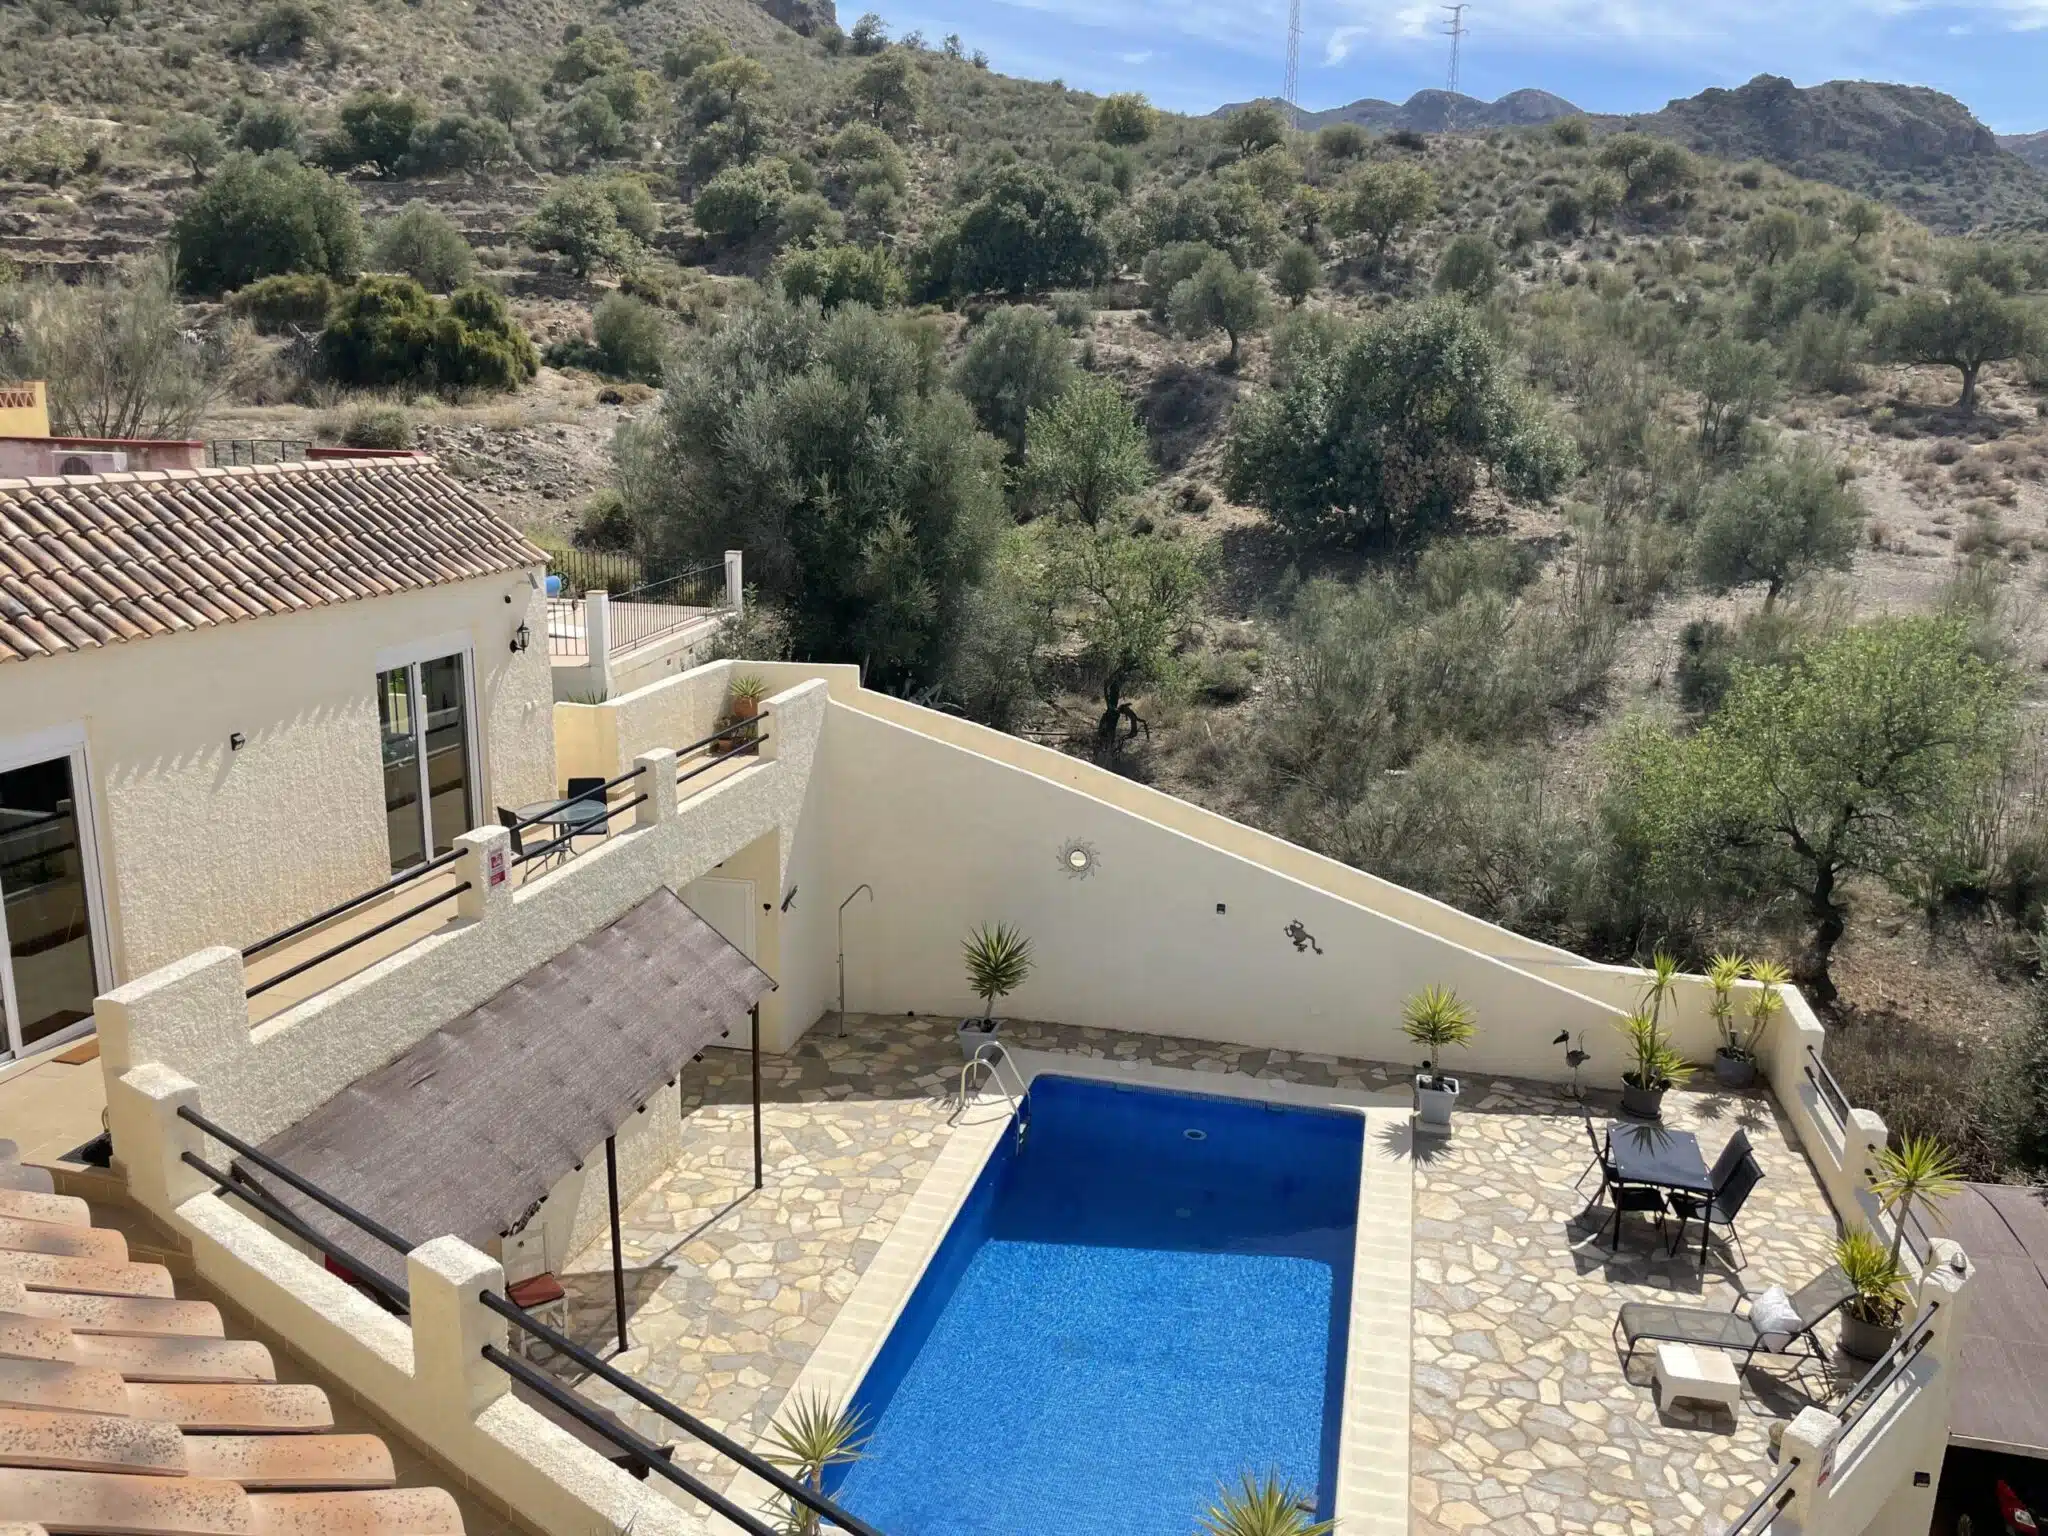 Resale Villa Te koop in Sorbas in Spanje, gelegen aan de Costa de Almería